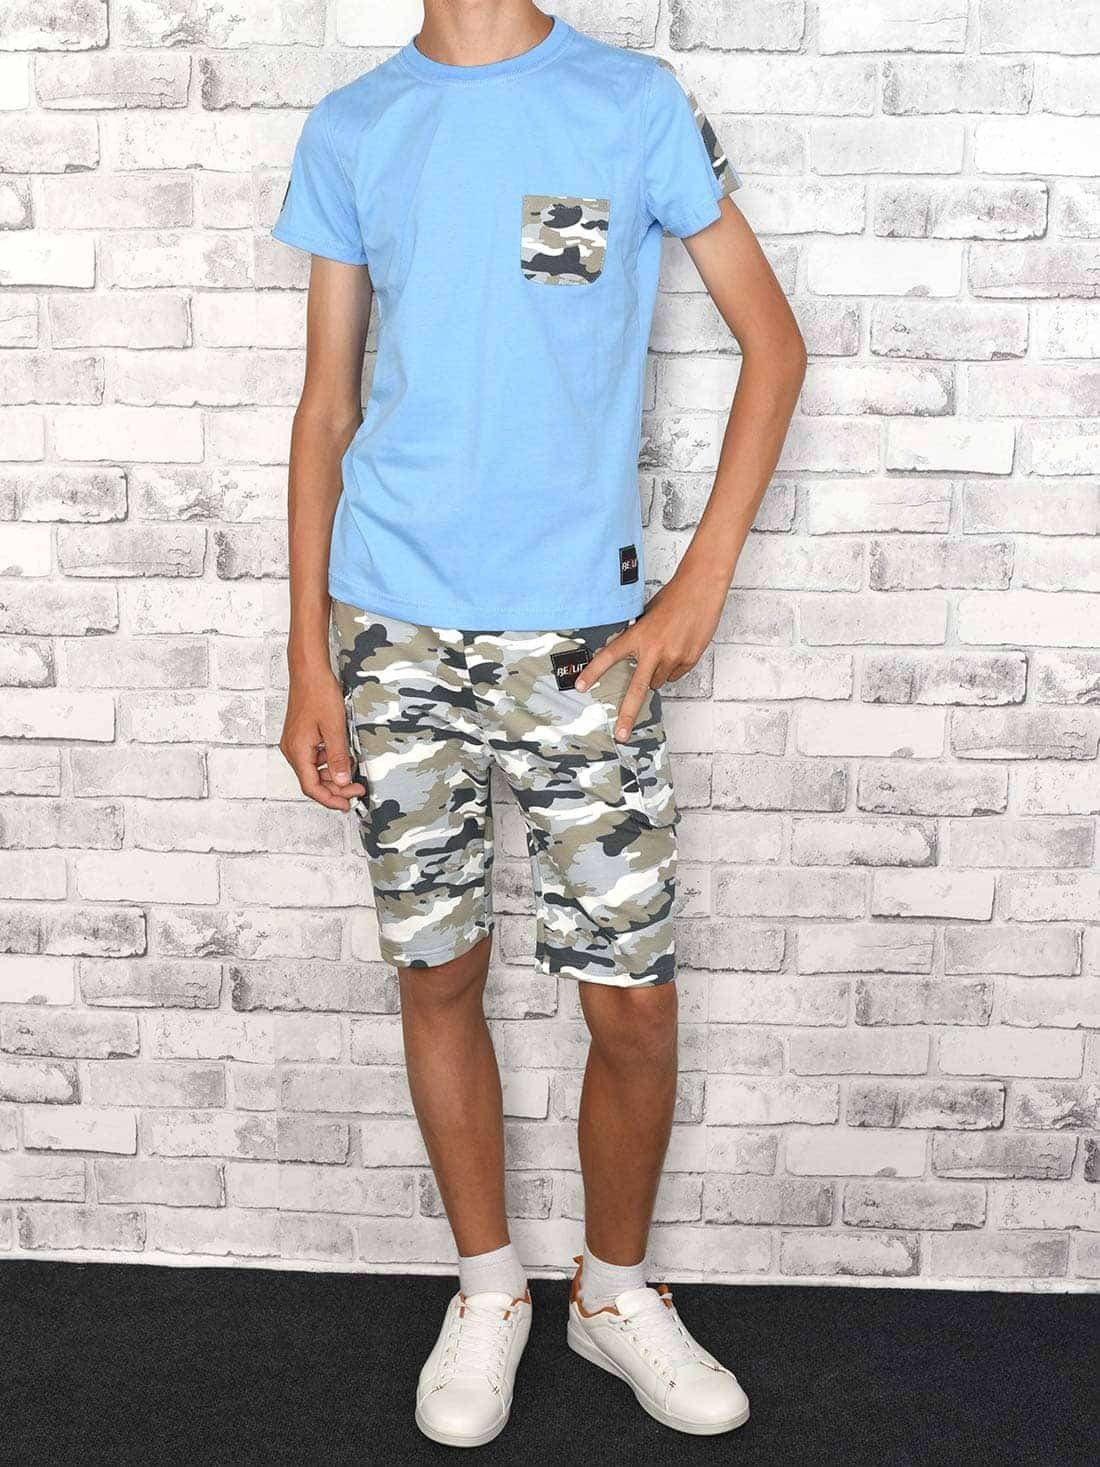 BEZLIT T-Shirt & Shorts (1-tlg) casual Cargo und Shorts Jungen Grau T-Shirt Set Camouflage Sommer Hellblau 